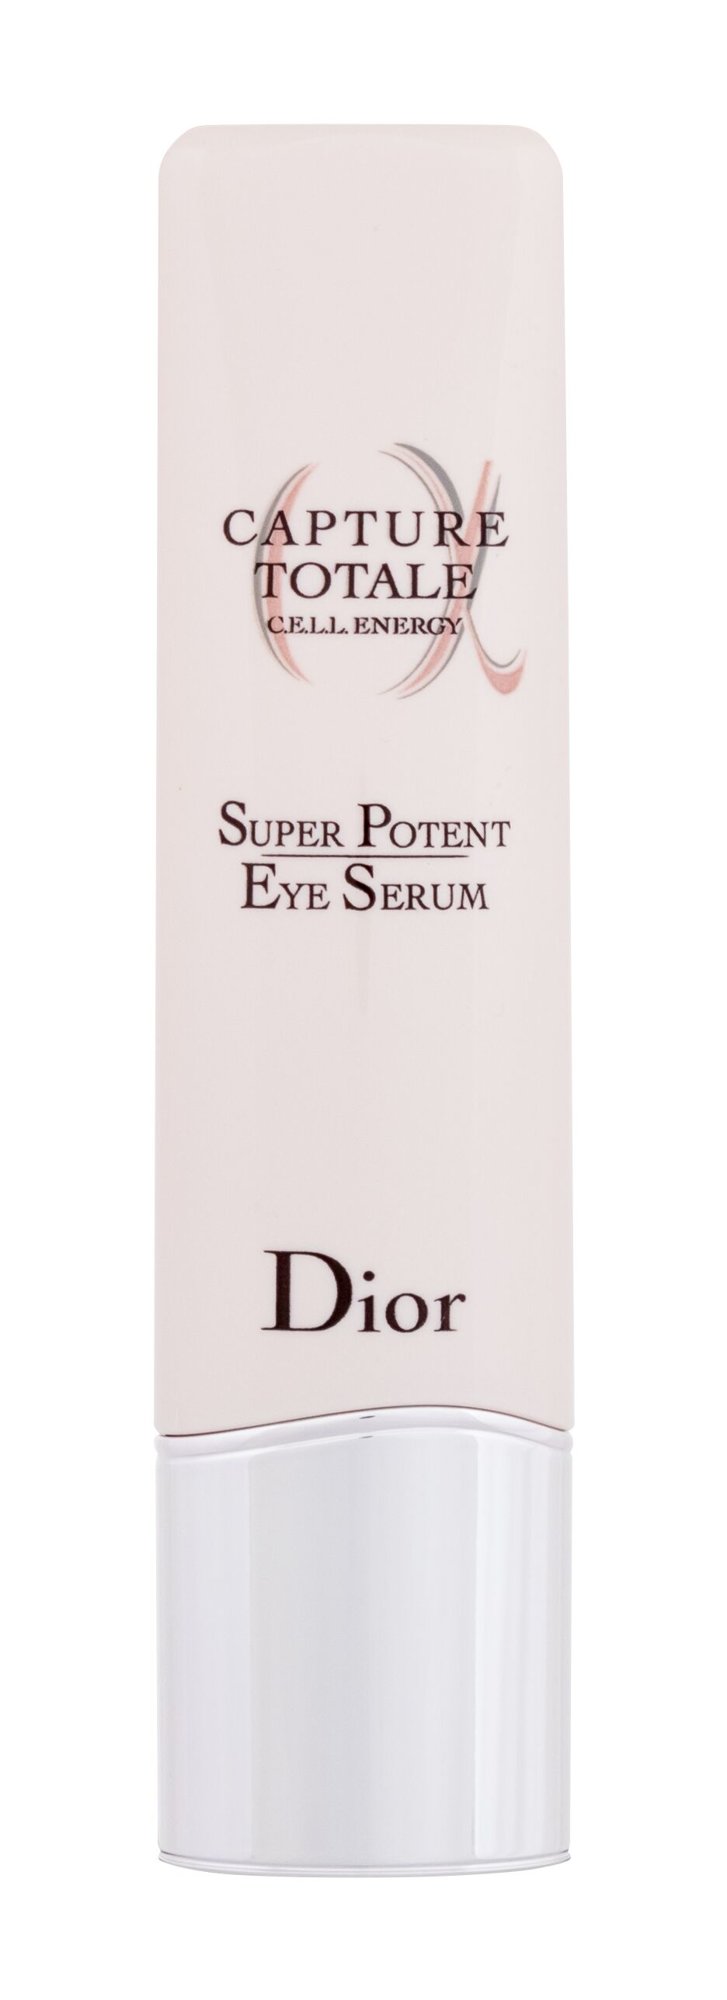 Christian Dior Capture Totale C.E.L.L. Energy Super Potent paakių serumas